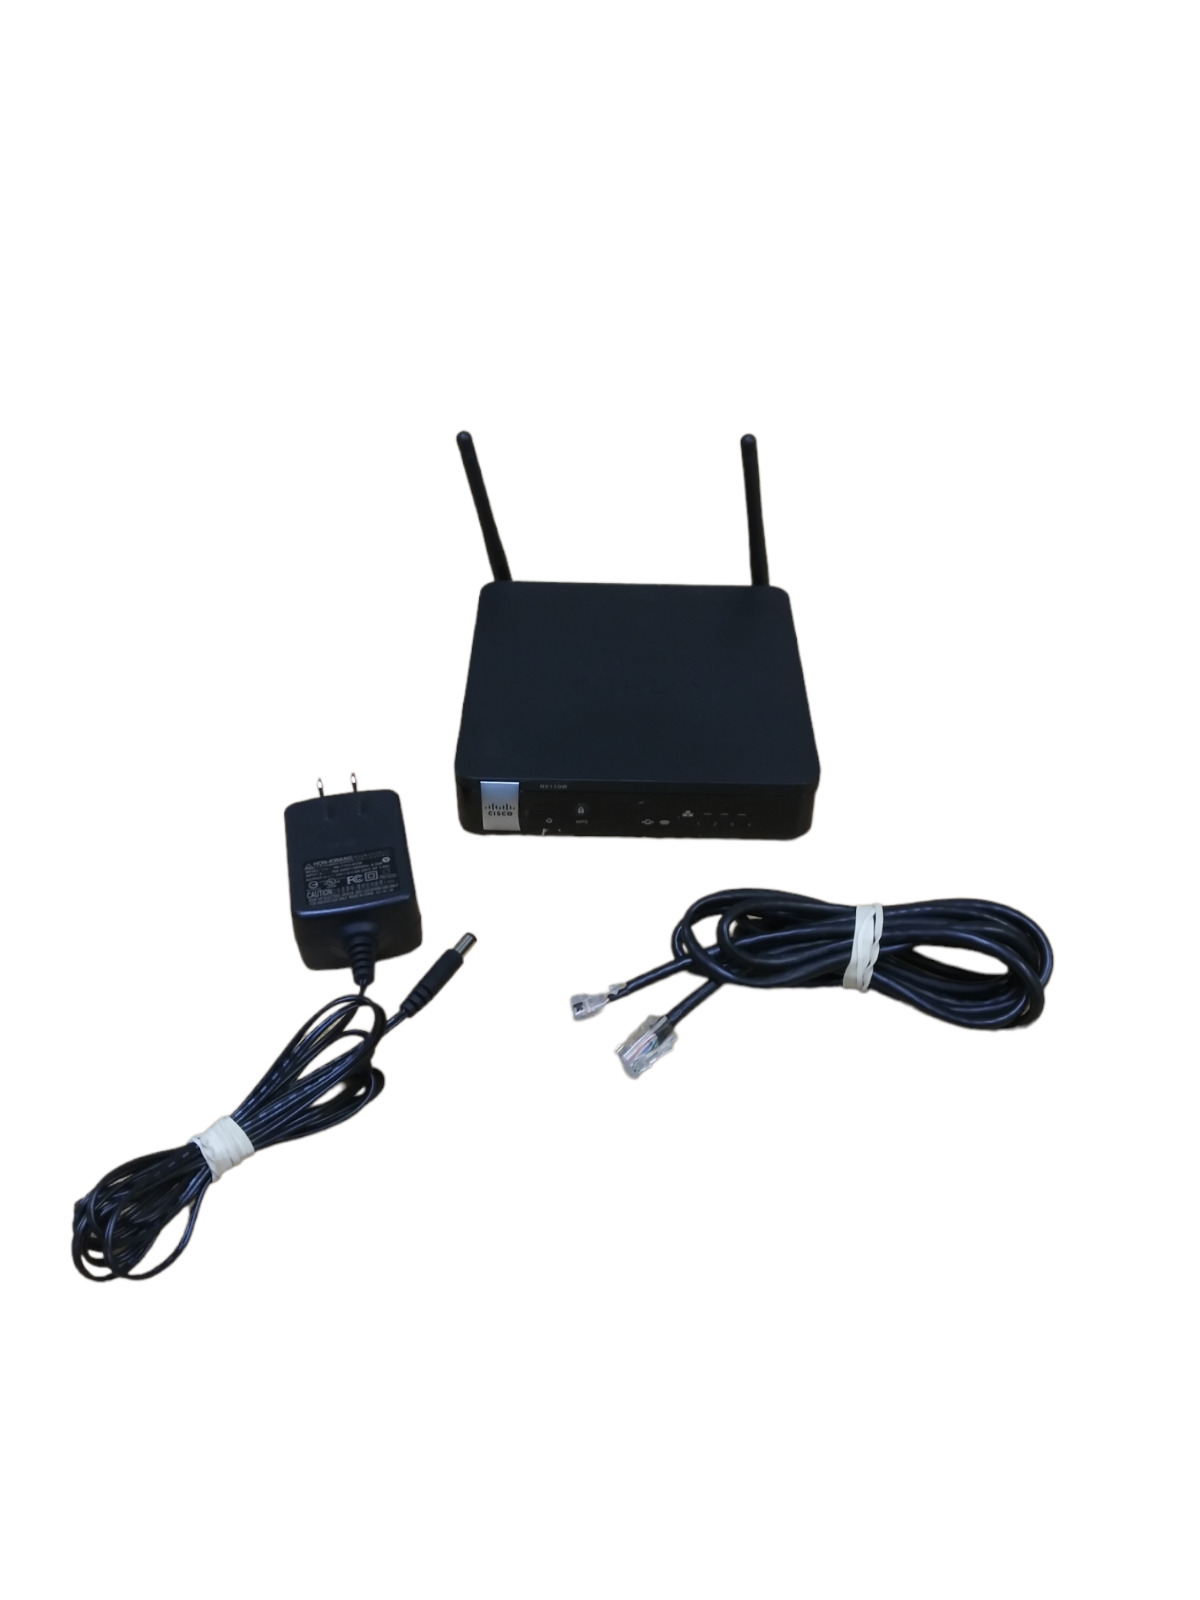 Cisco Small Business RV110W Wireless N VPN Firewall Router